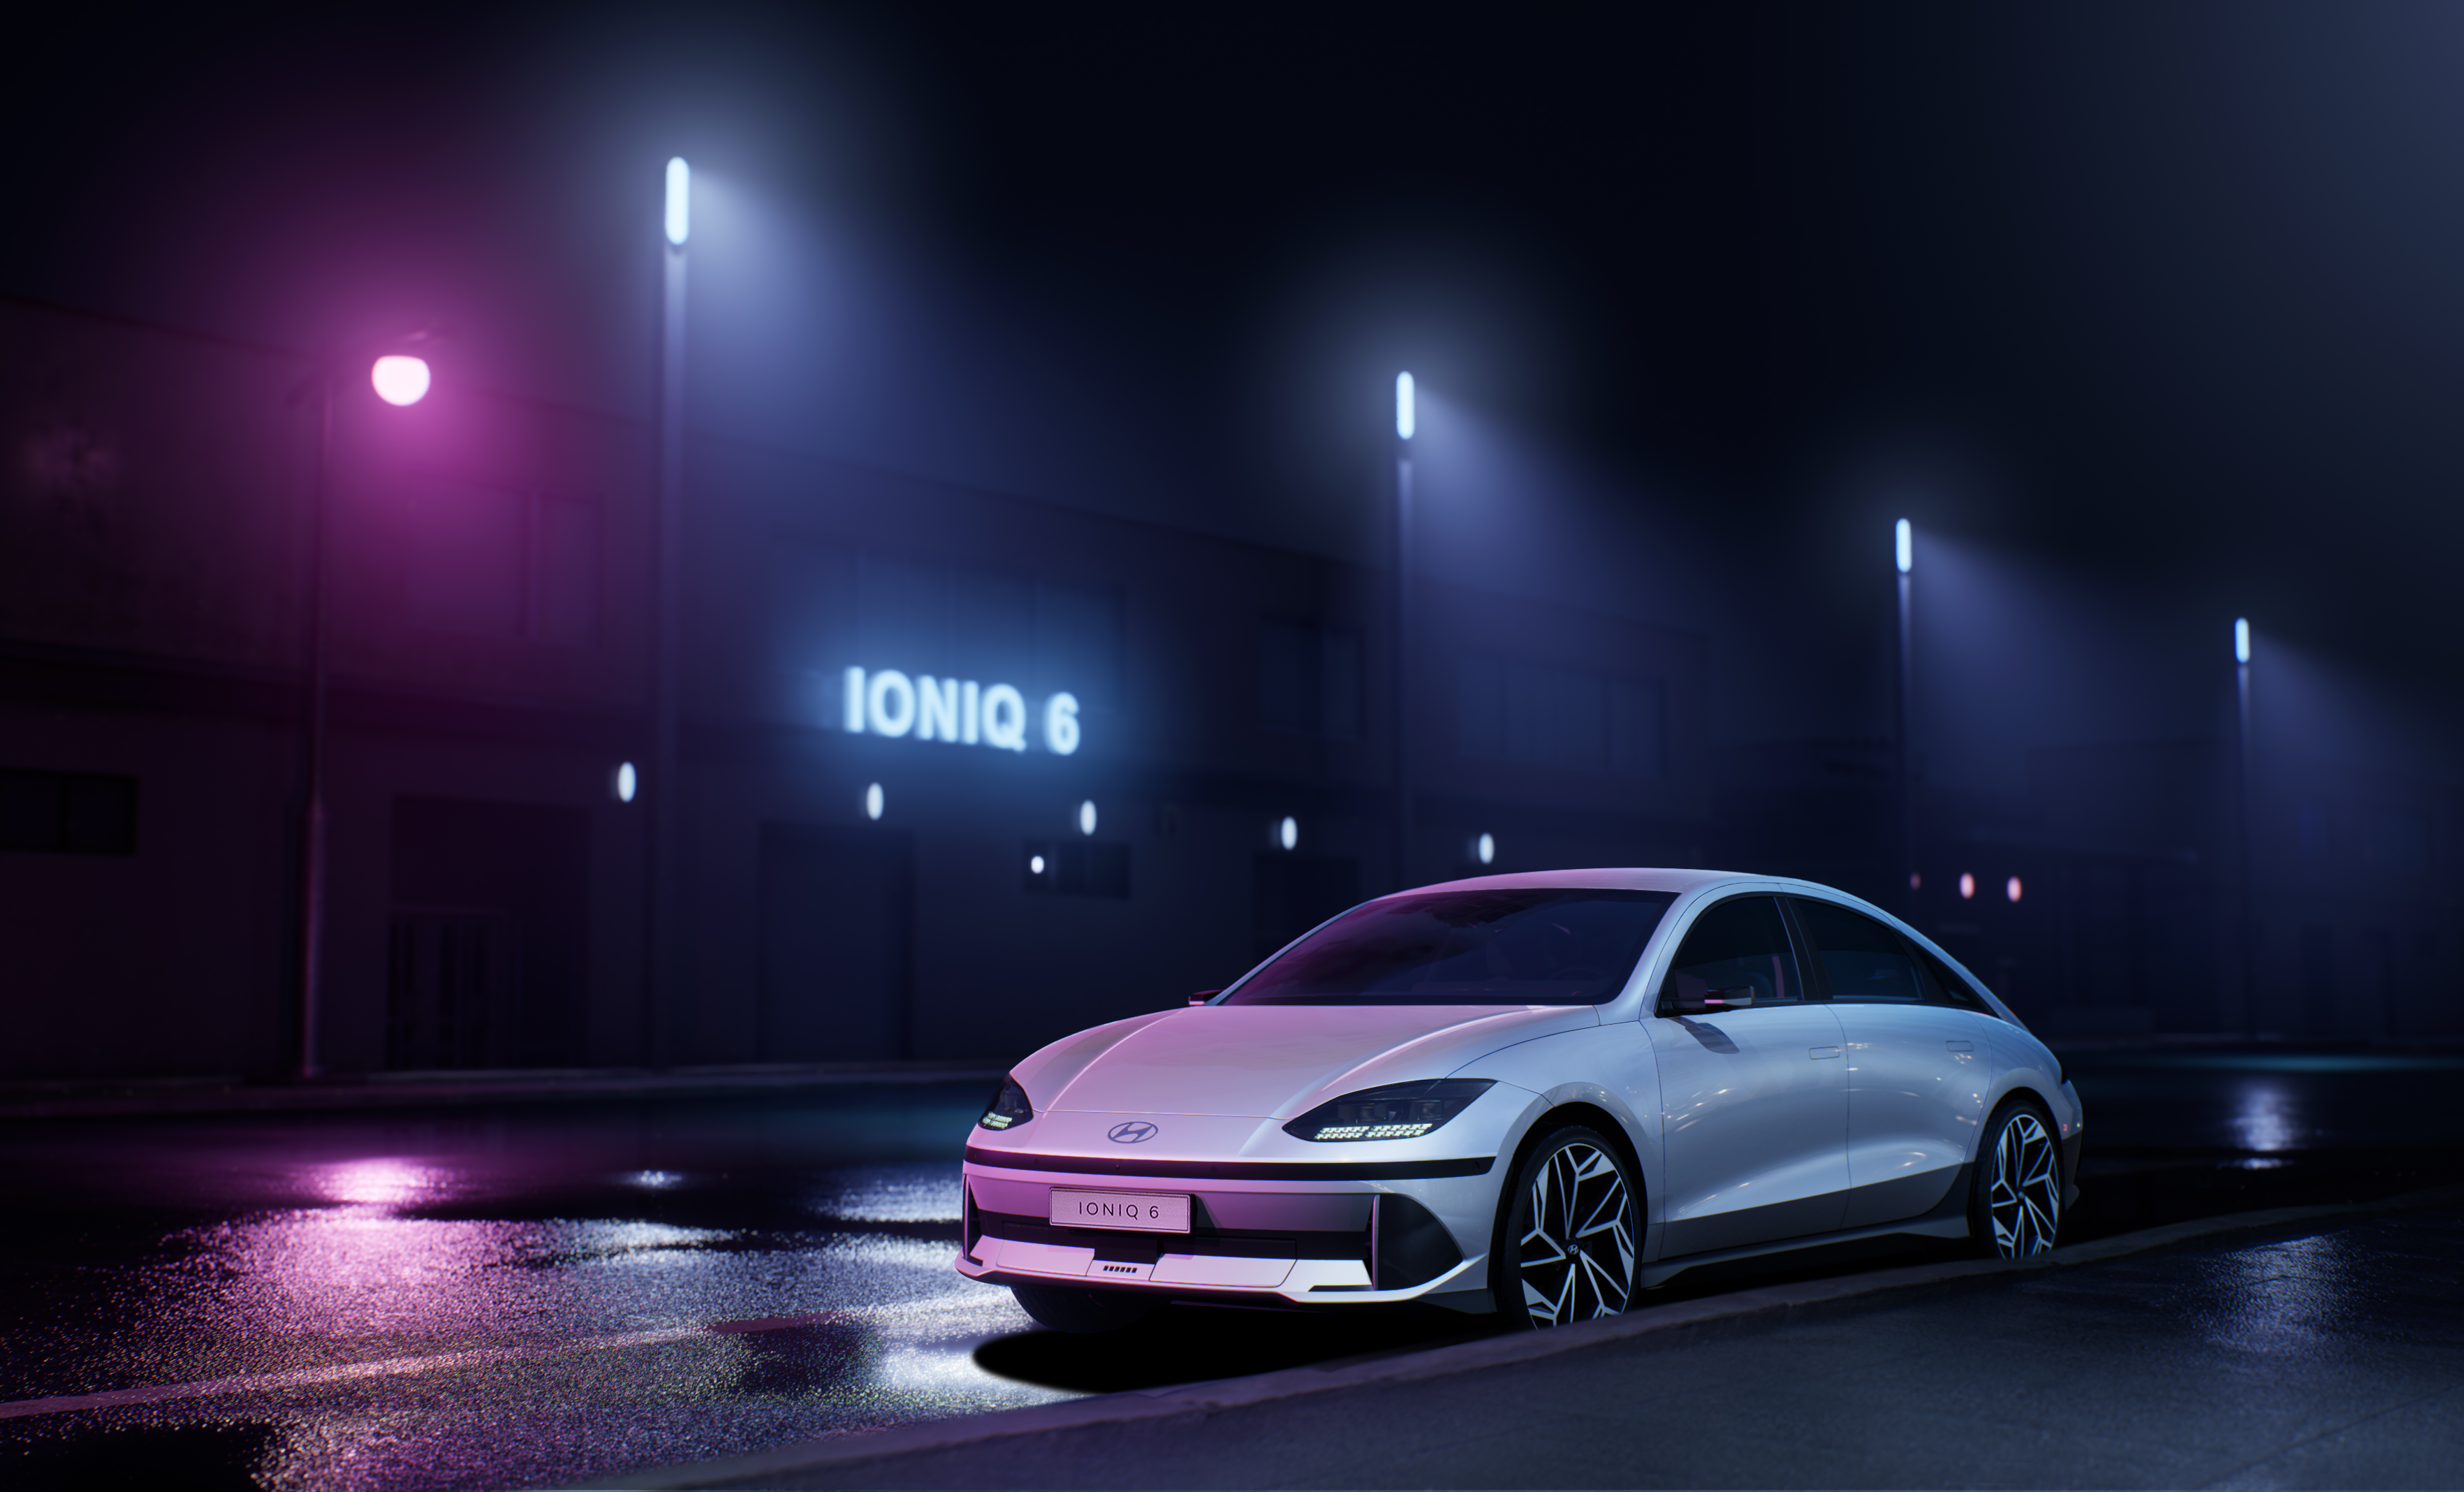 Hyundai’s initial EV sedan is the futuristic Ioniq 6